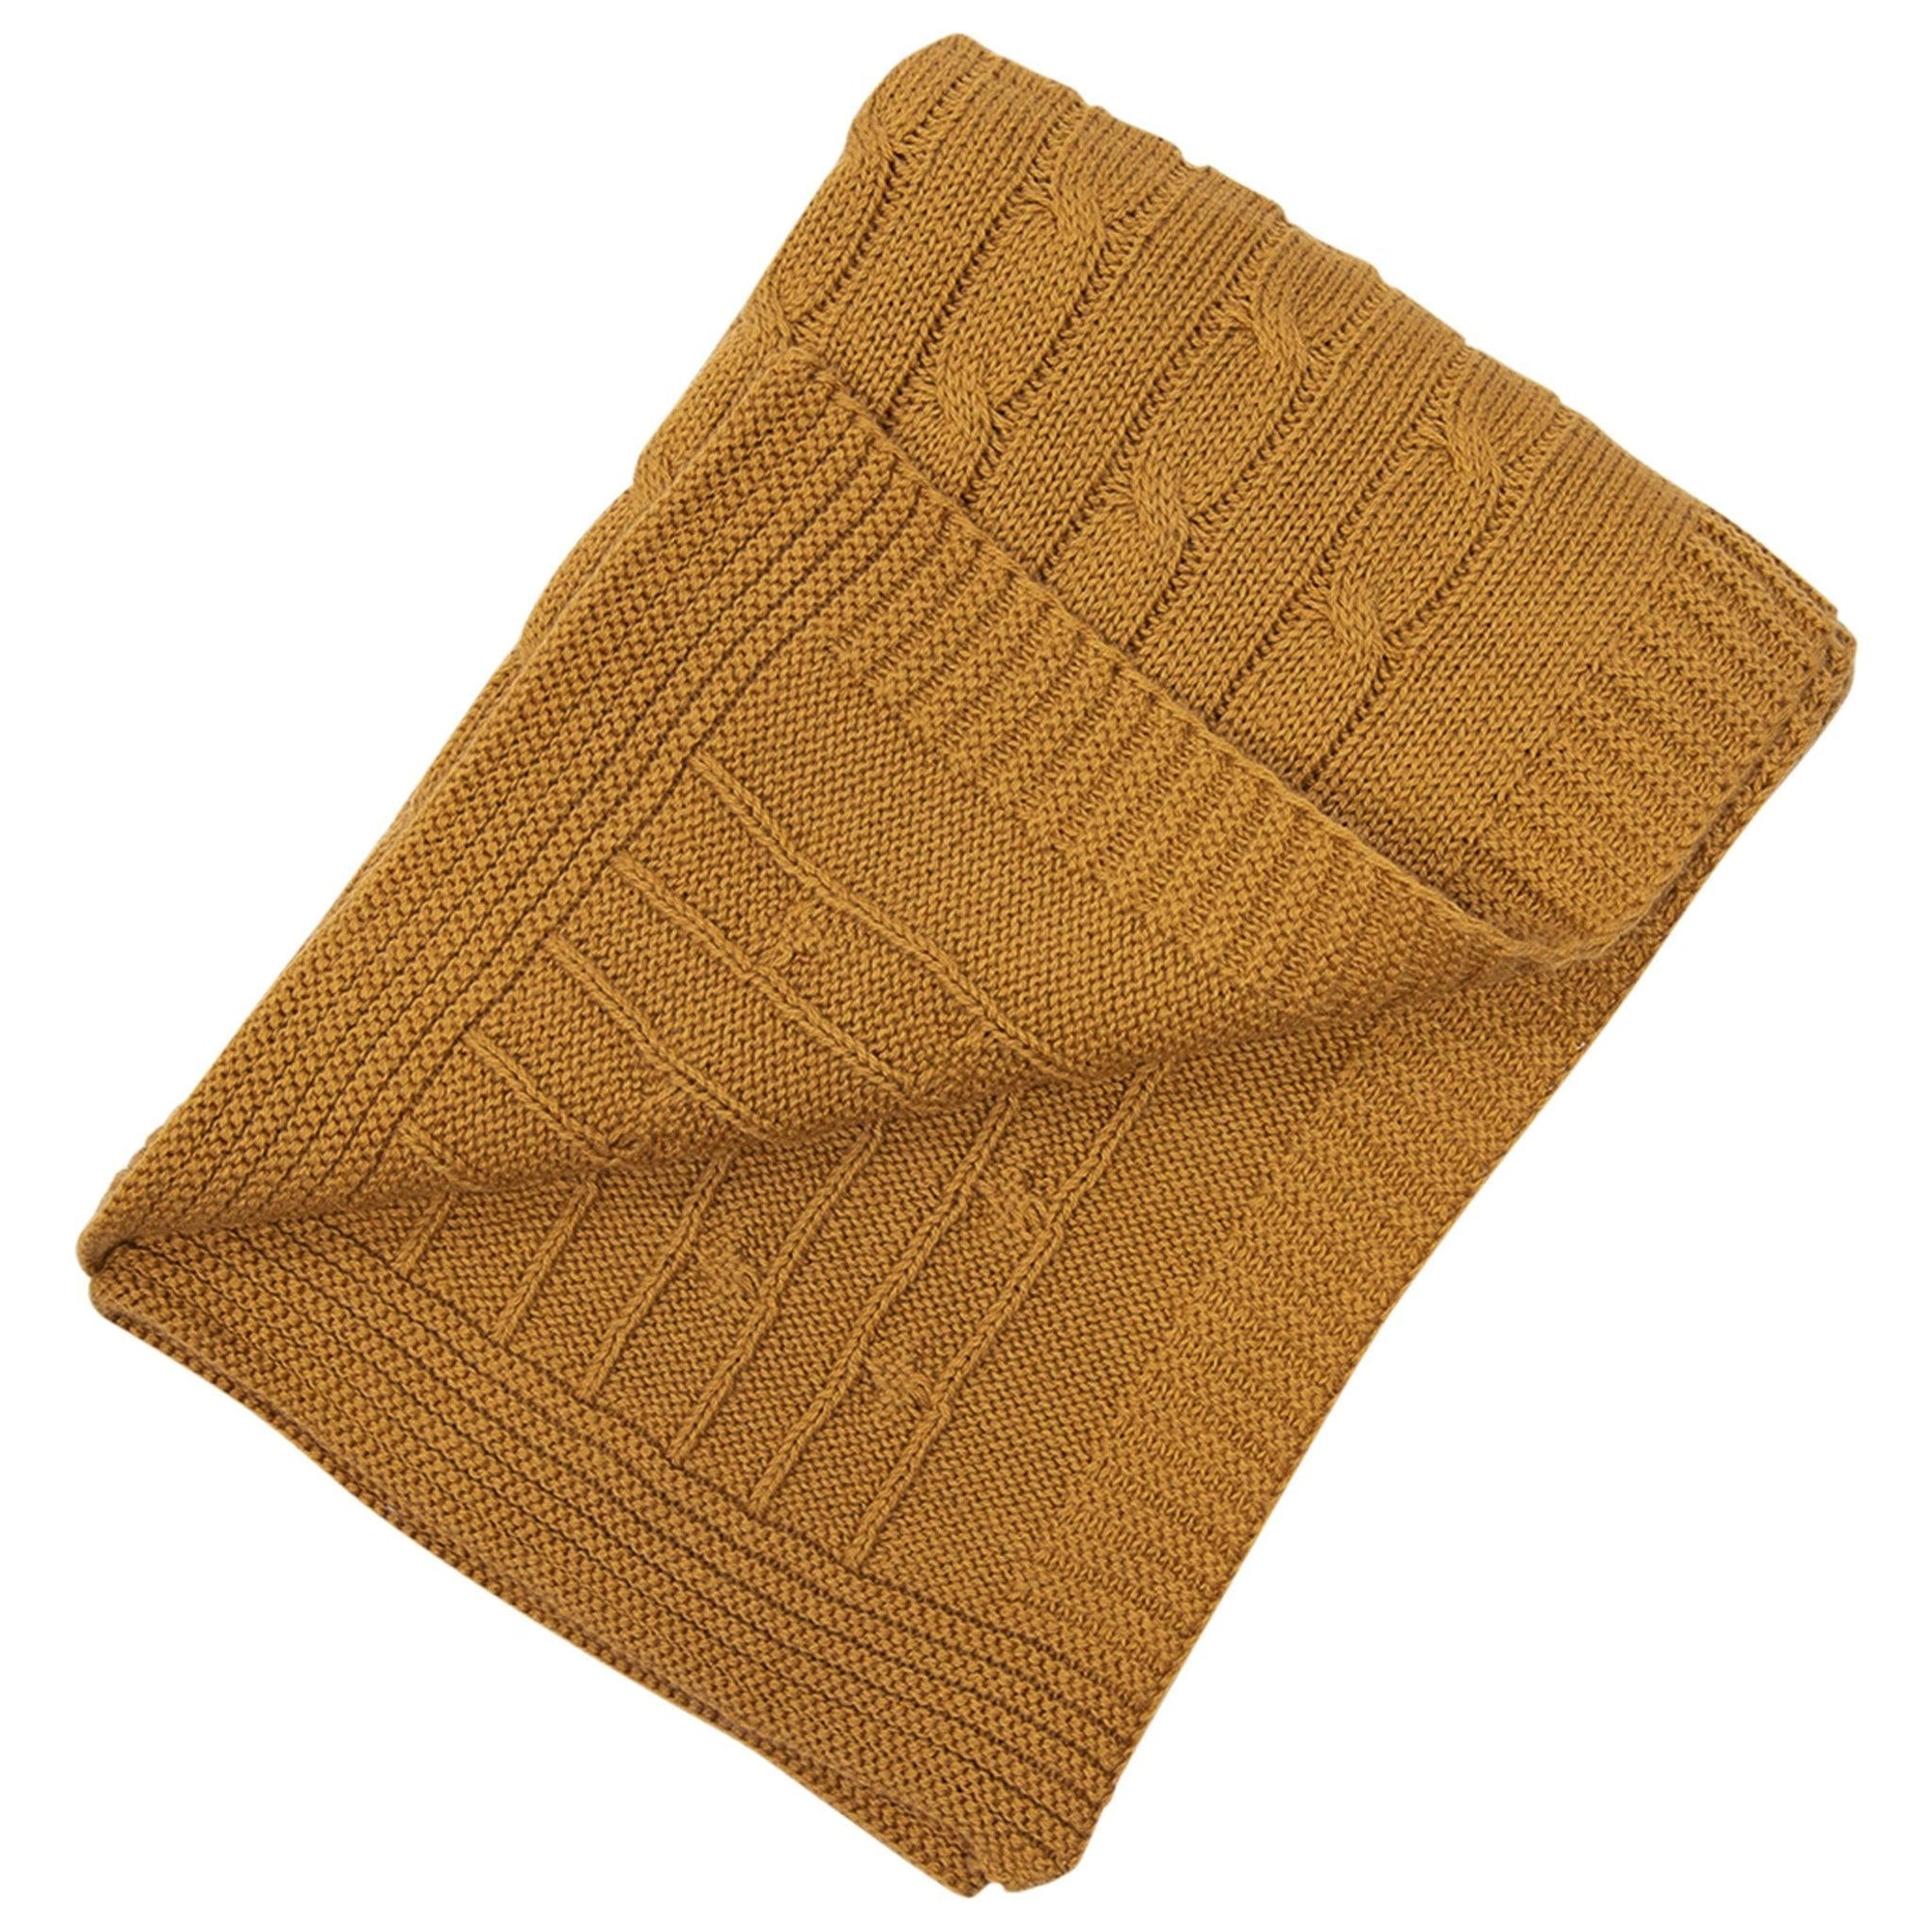 Korango Rustic Class Knit Blanket - Brown - Blanket - Korango